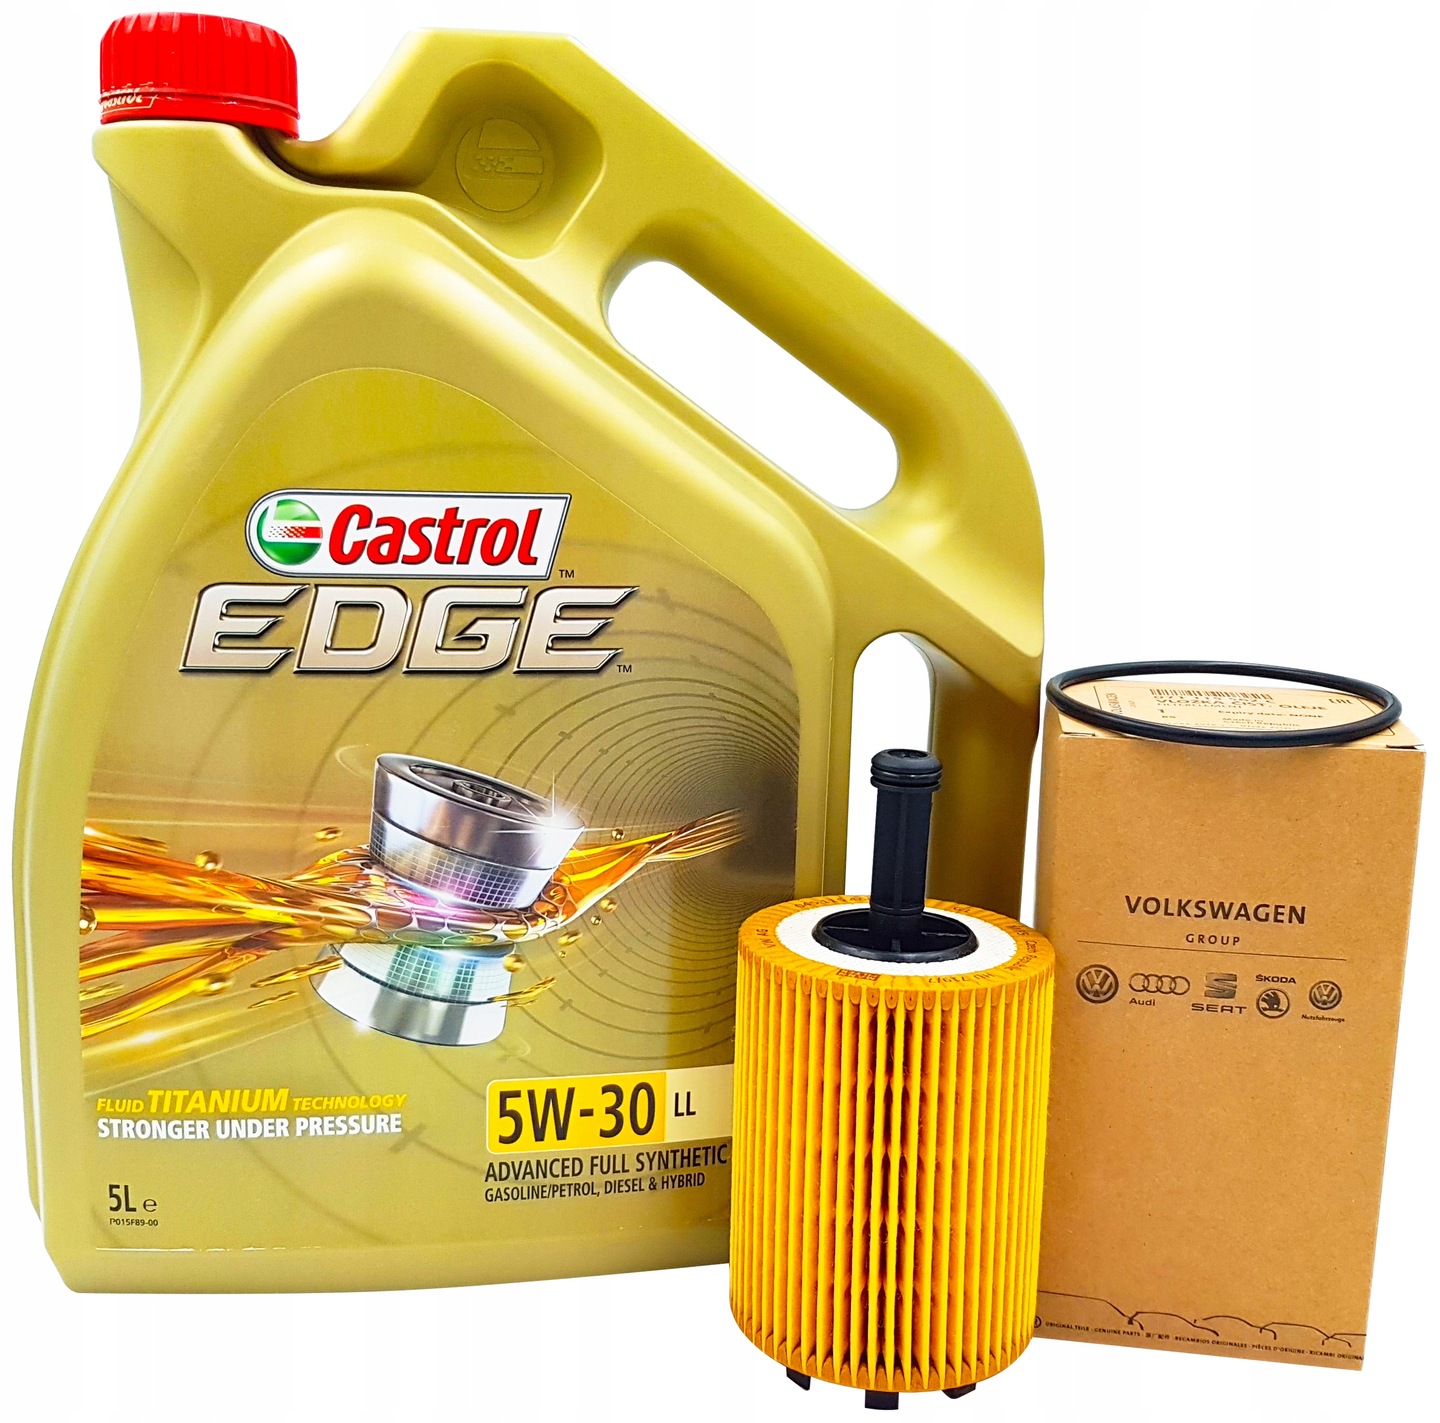 Buy Vw touran 1.9 2.0 tdi oil filter oil 5w30 5l ❱ XDALYS